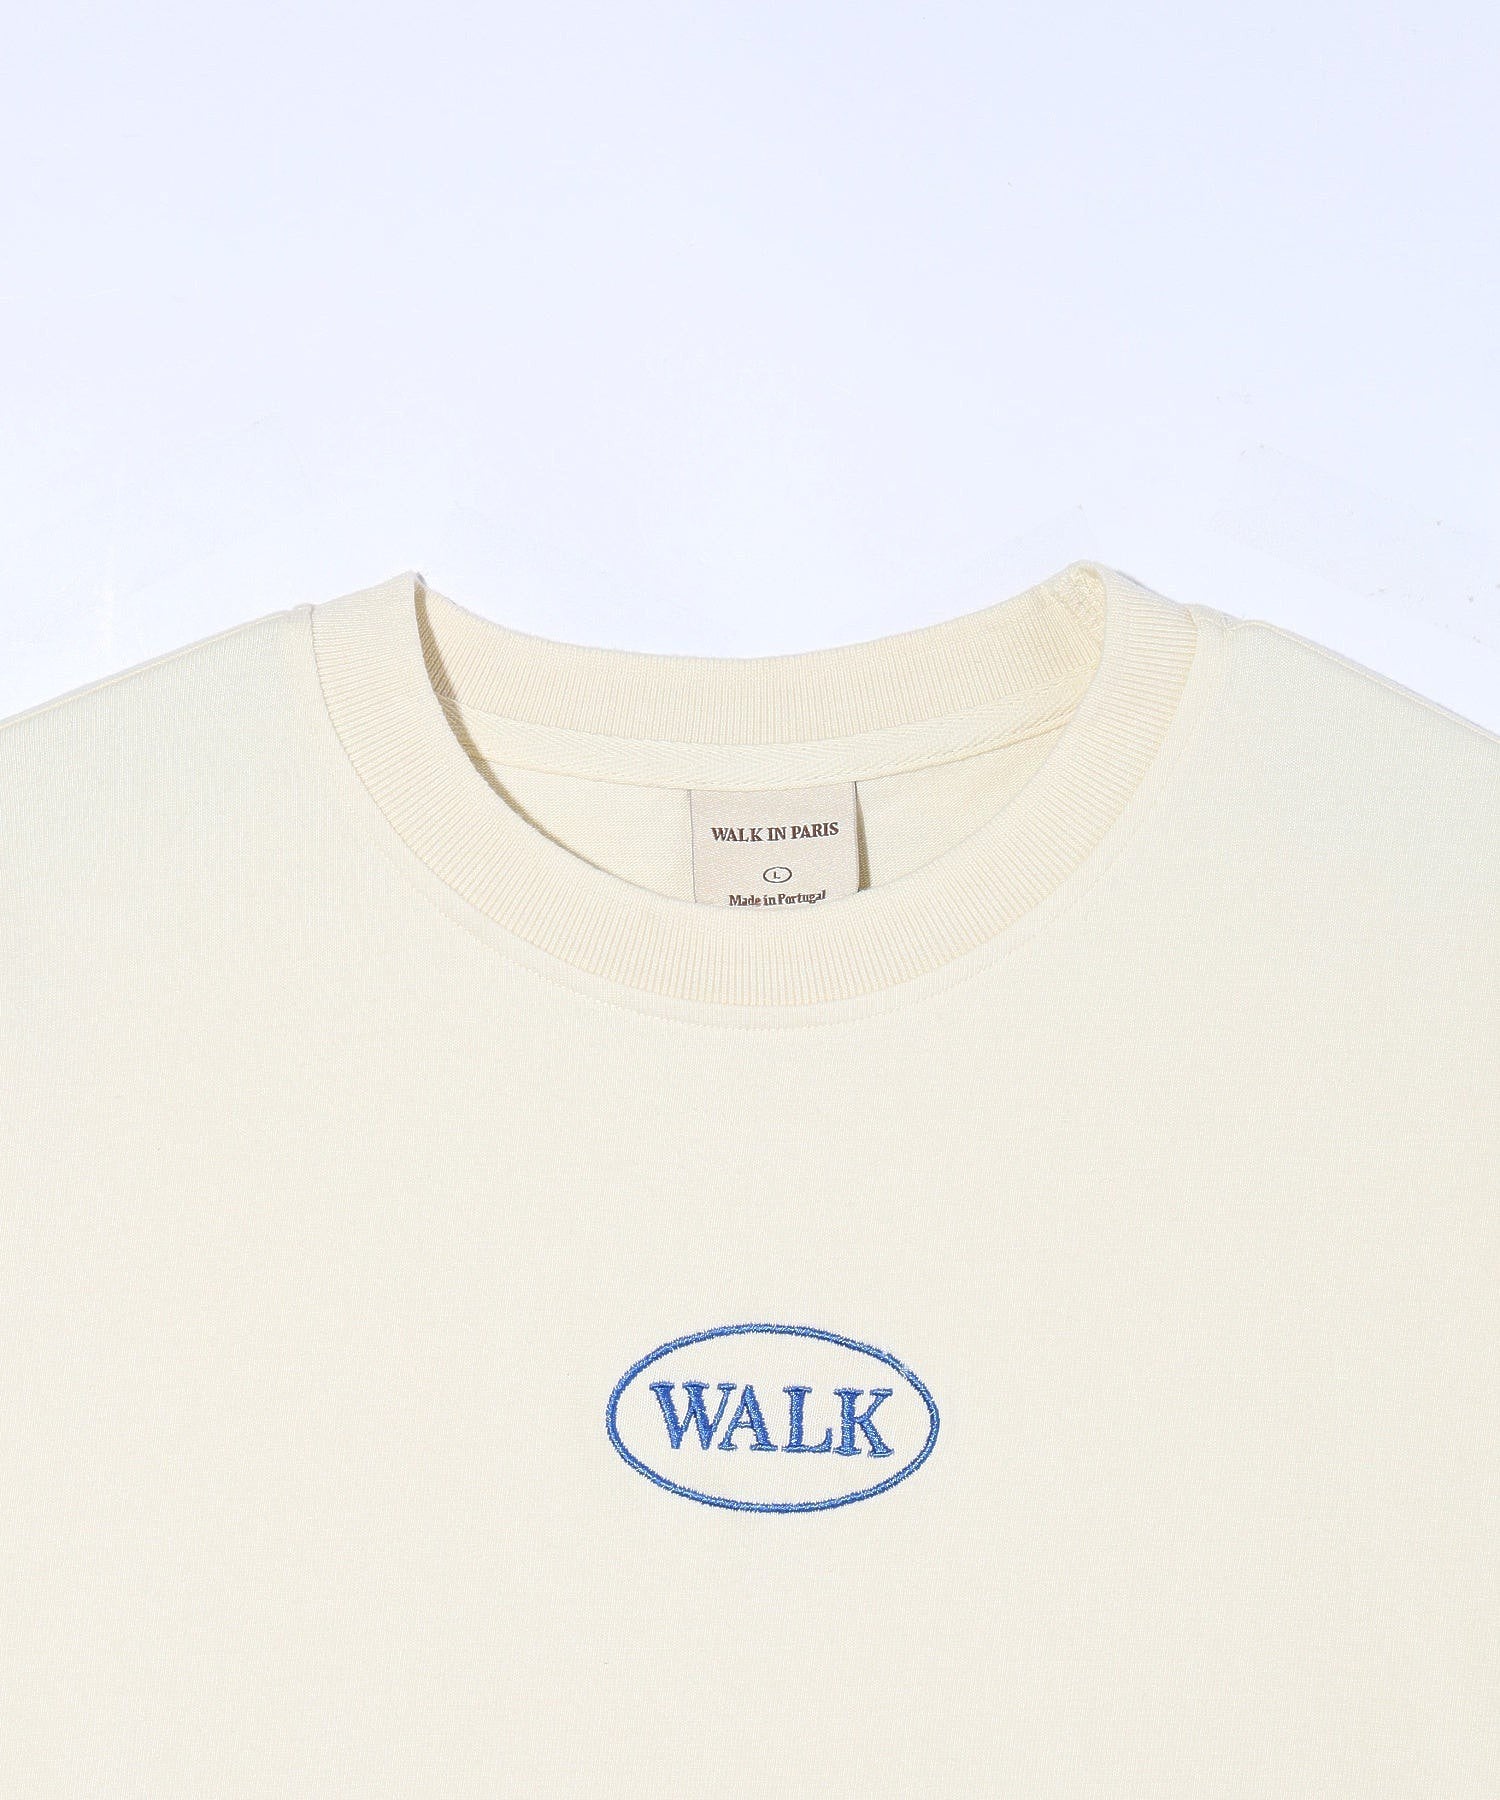 WALK IN PARIS/ウォーキンパリス/Le t-shirt classique sable